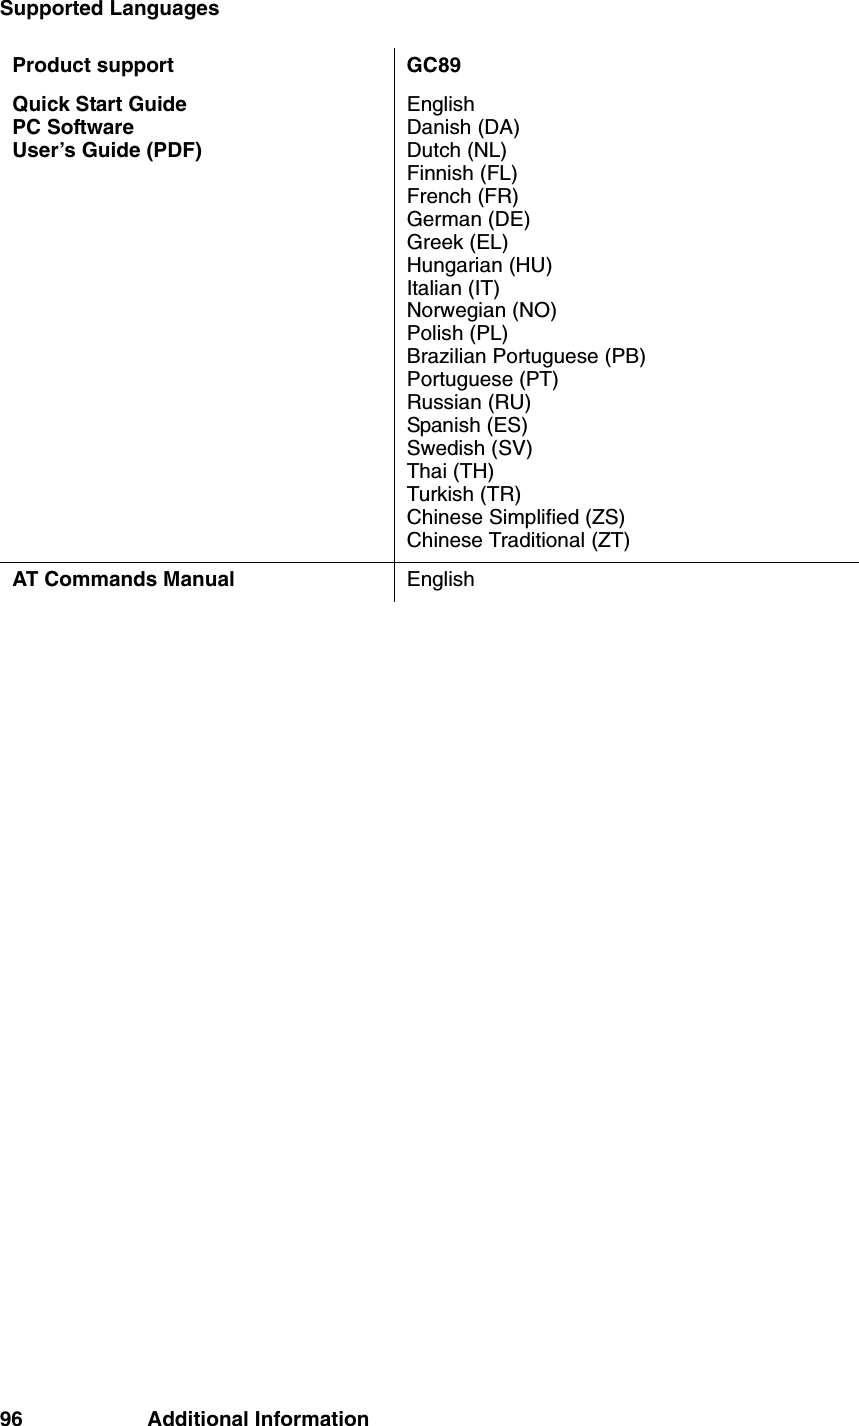 96 Additional InformationSupported LanguagesProduct support GC89Quick Start GuidePC SoftwareUser’s Guide (PDF)EnglishDanish (DA)Dutch (NL)Finnish (FL)French (FR)German (DE)Greek (EL)Hungarian (HU)Italian (IT)Norwegian (NO)Polish (PL)Brazilian Portuguese (PB)Portuguese (PT)Russian (RU)Spanish (ES)Swedish (SV)Thai (TH)Turkish (TR)Chinese Simplified (ZS)Chinese Traditional (ZT)AT Commands Manual English